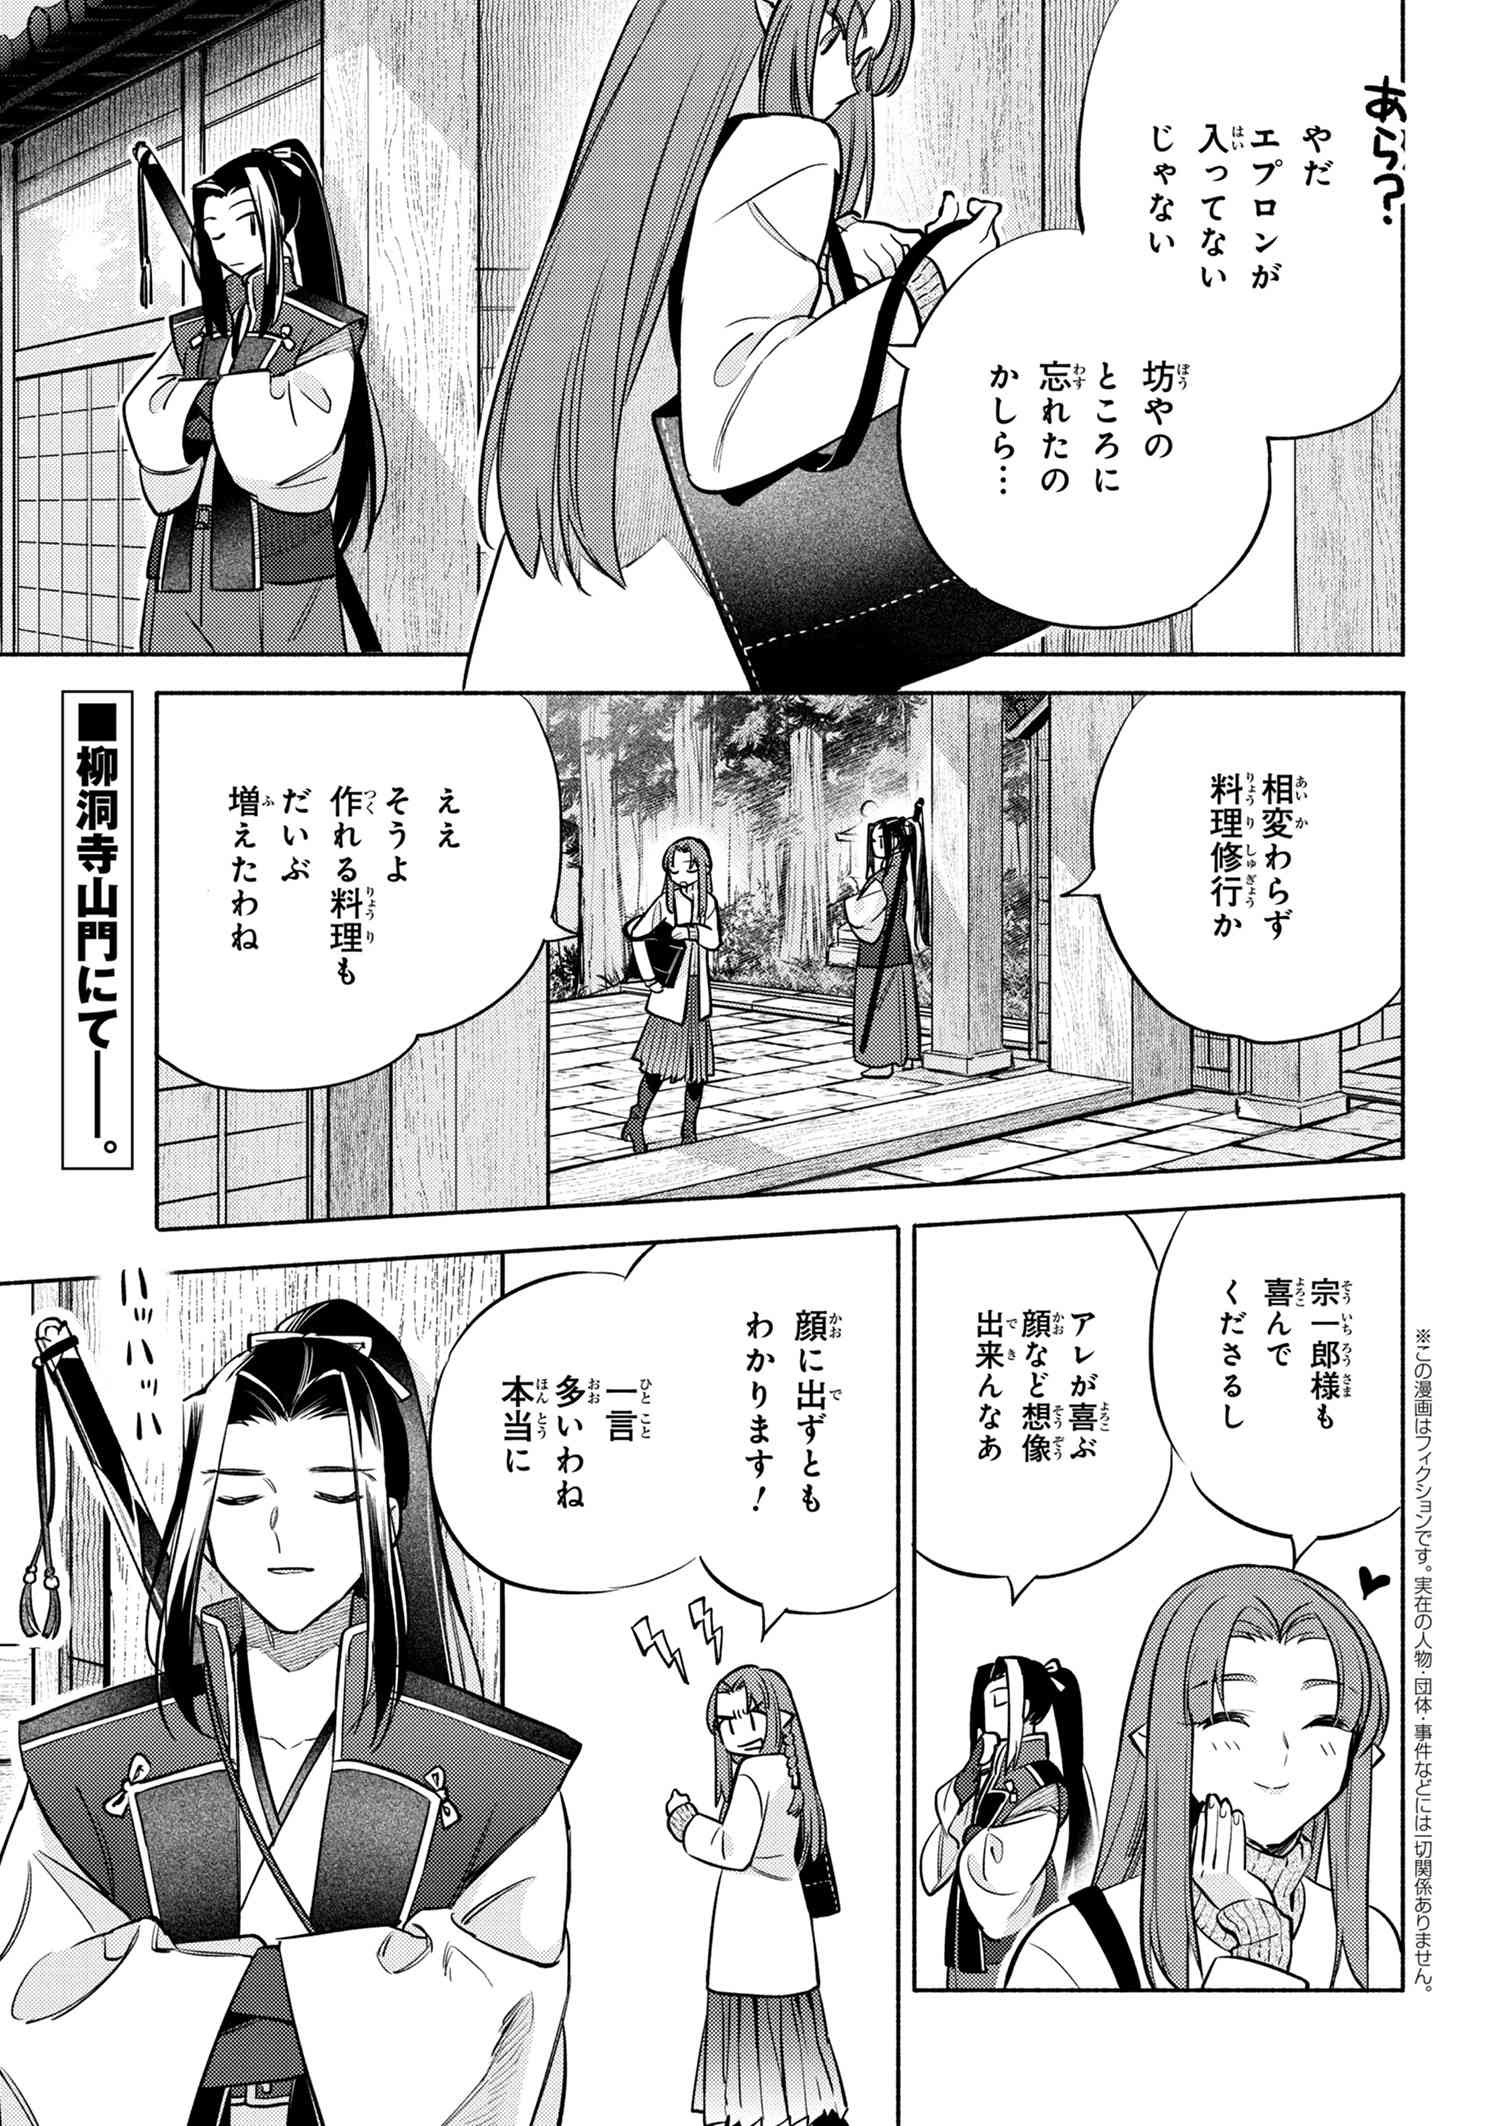 Emiya-san Chi no Kyou no Gohan - Chapter 46 - Page 1